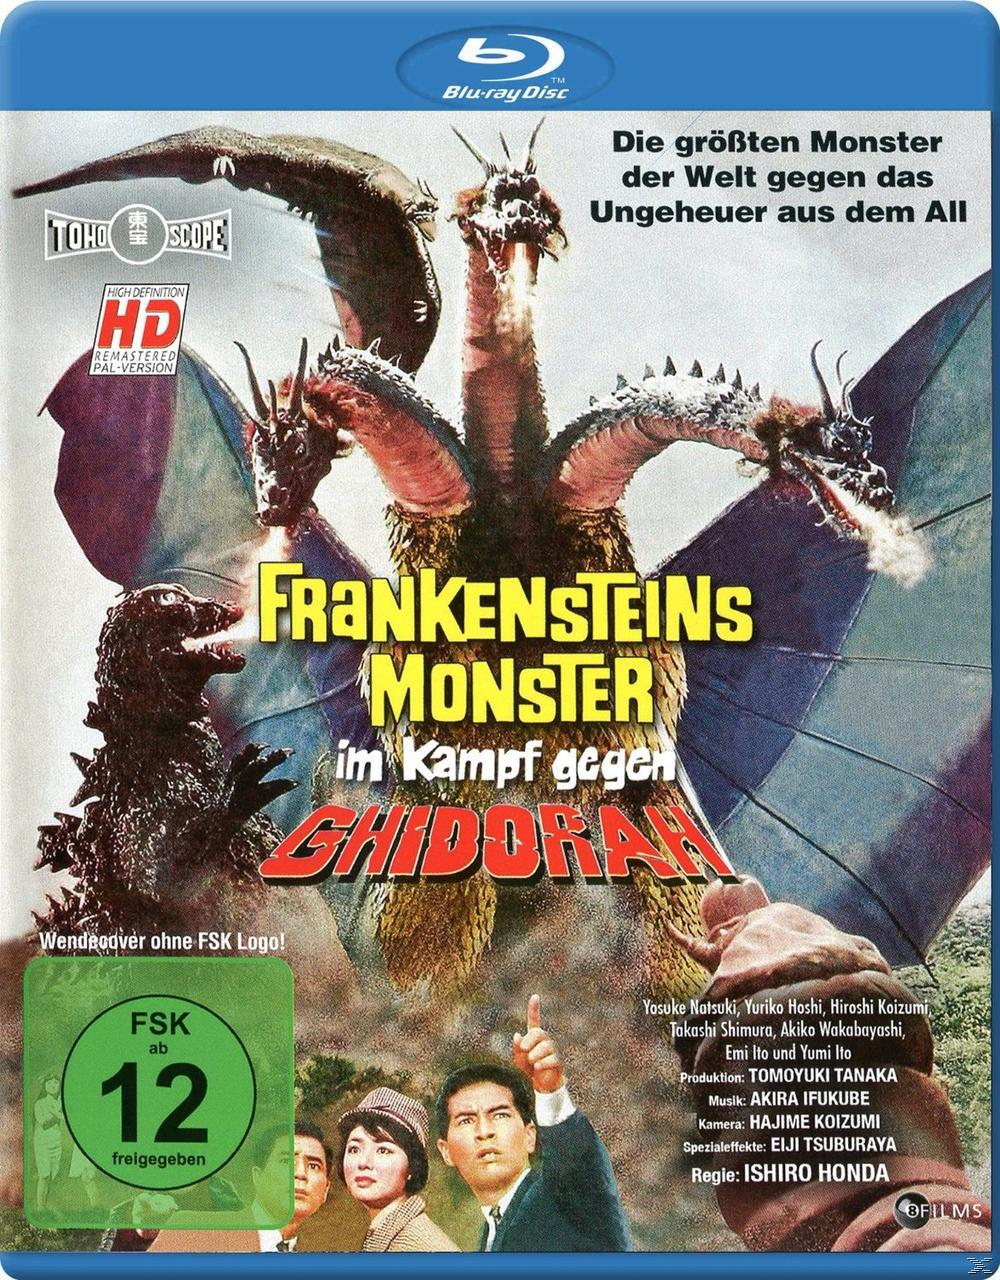 GEGEN MONSTER GHIDORAH FRANKENSTEINS IM KAMPF Blu-ray